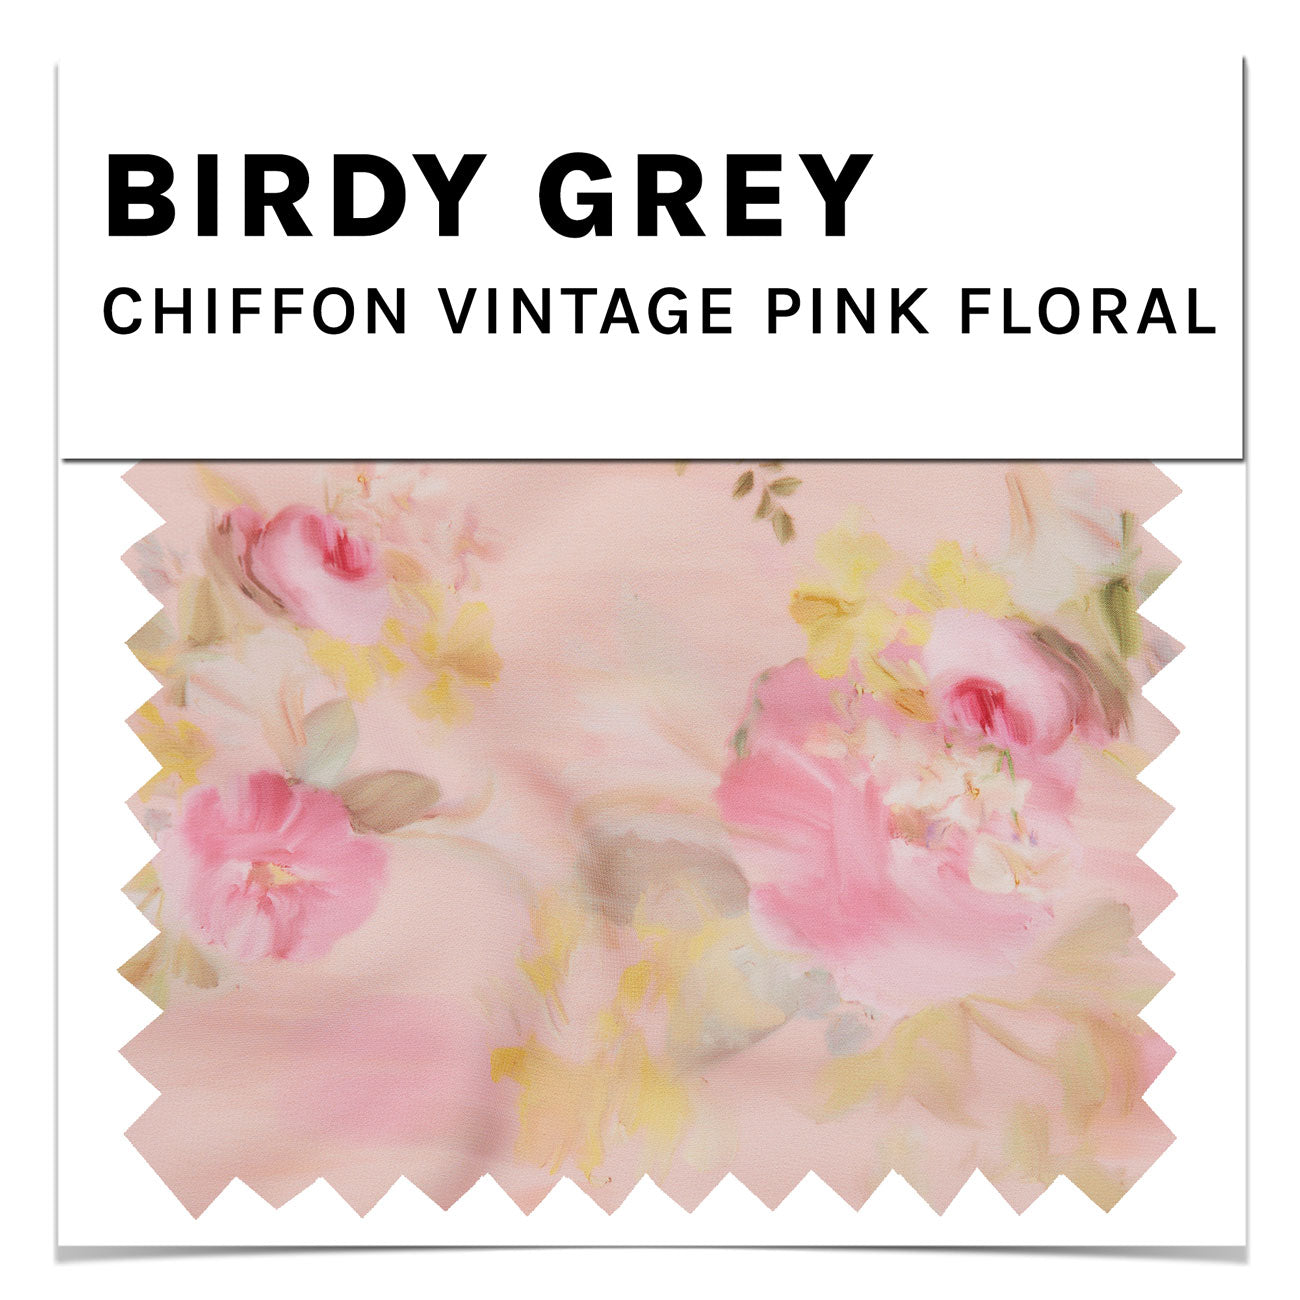 Vintage Pink Floral Chiffon Swatch by Birdy Grey